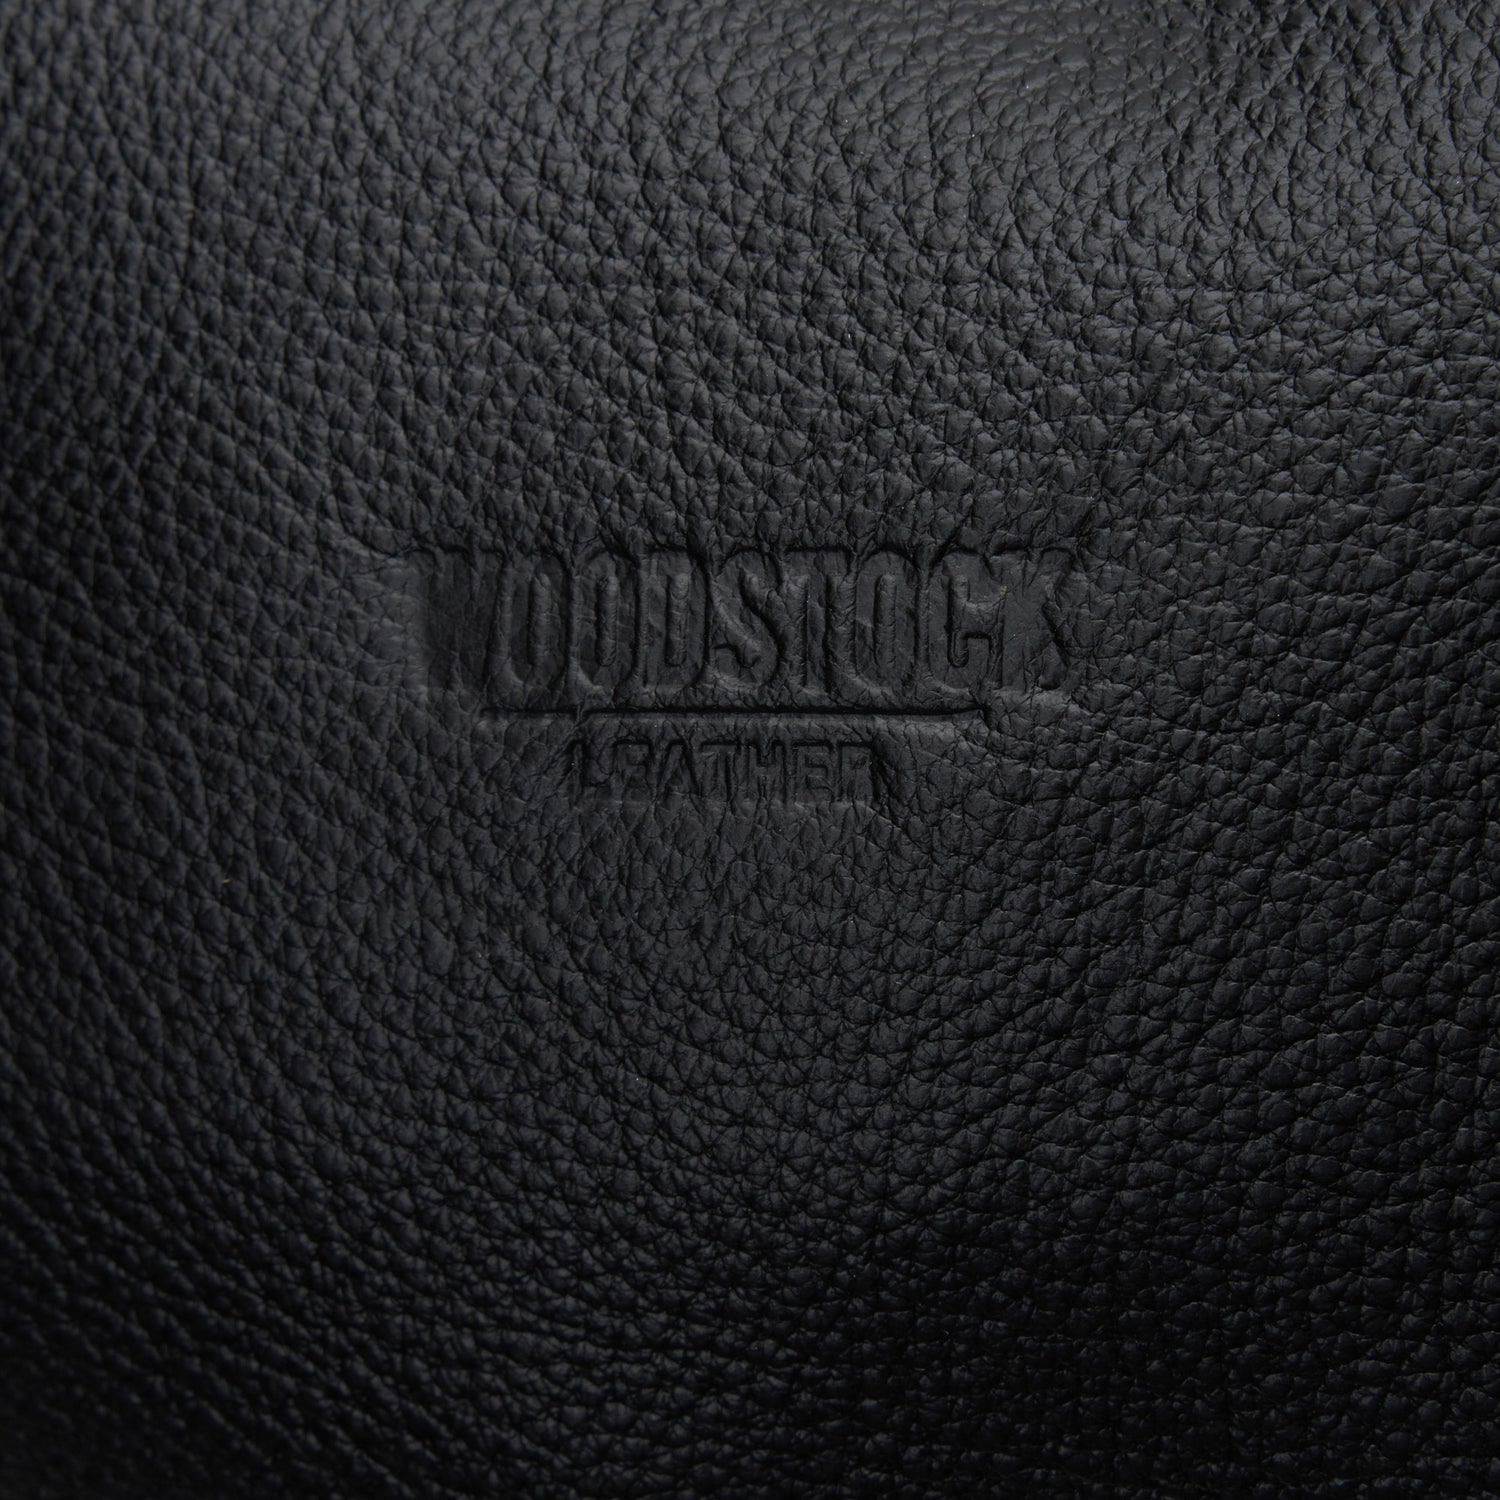 Branding on Black Genuine Leather Freya Shoulder Hand Bag with Sling | Woodstock Leather